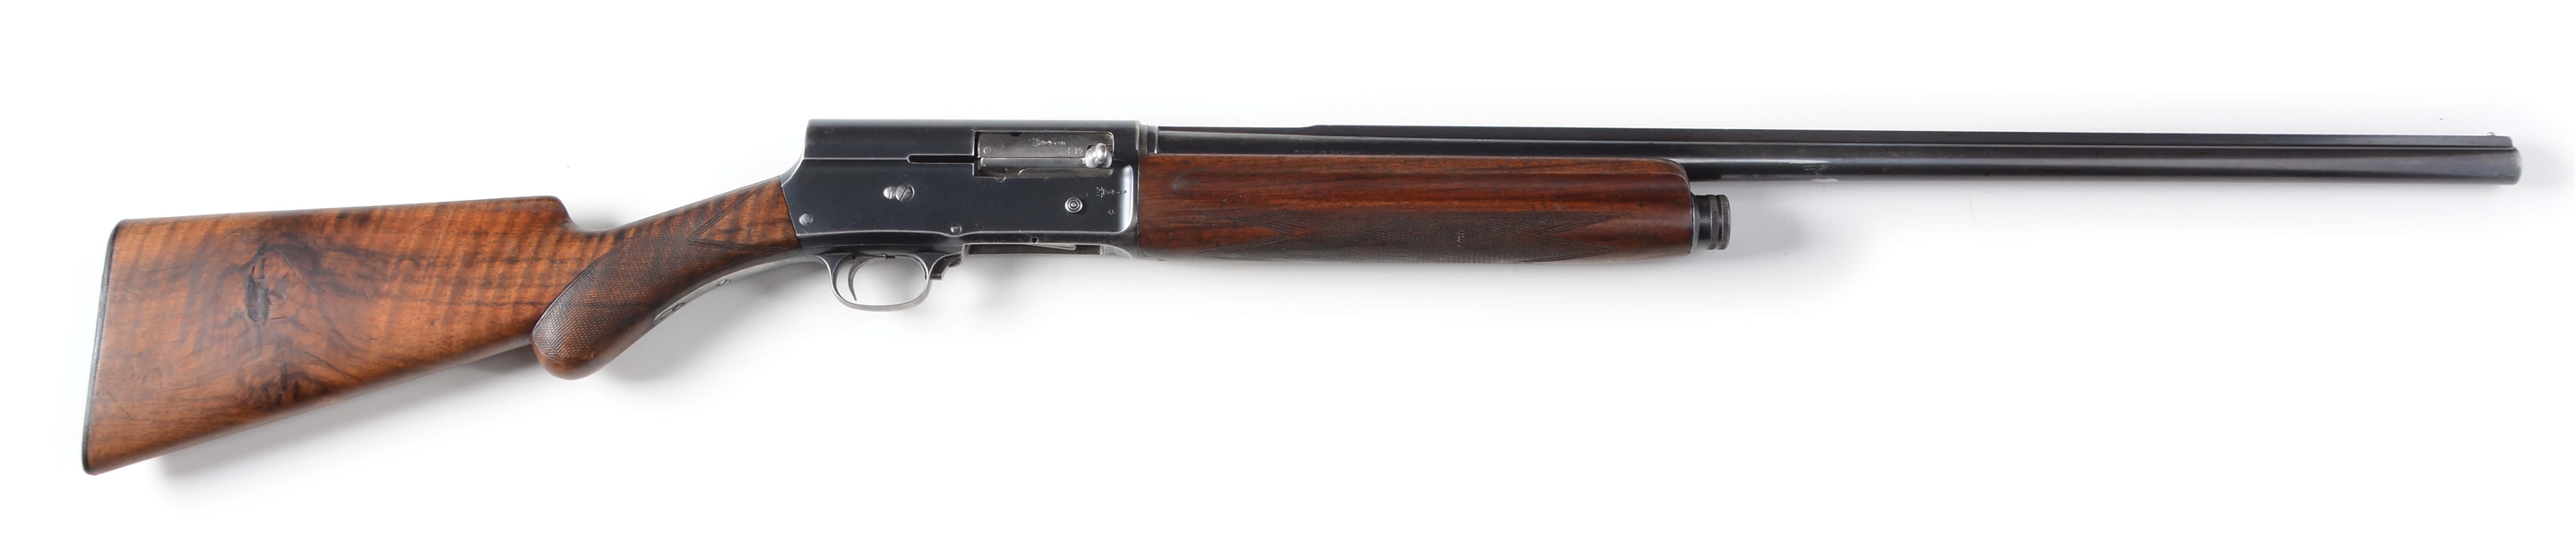 (C) EARLY FN BROWNING MODEL A5 SEMI-AUTOMATIC SHOTGUN (1927).